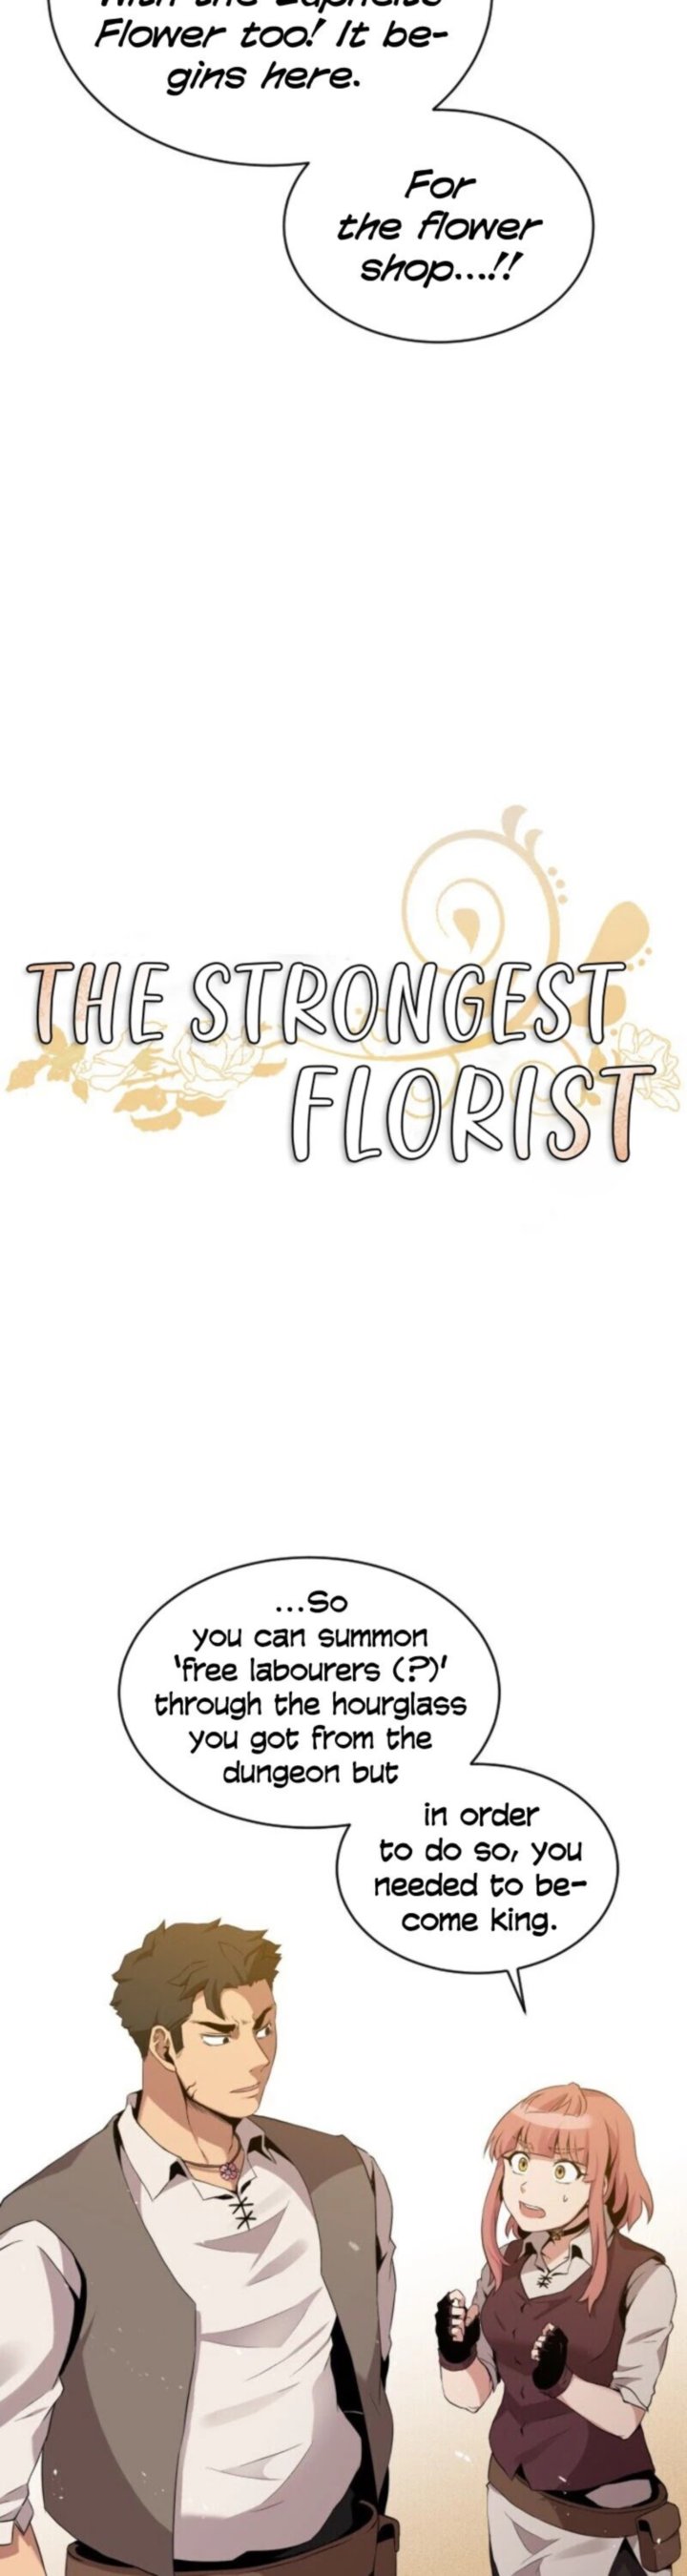 The Strongest Florist 17 10